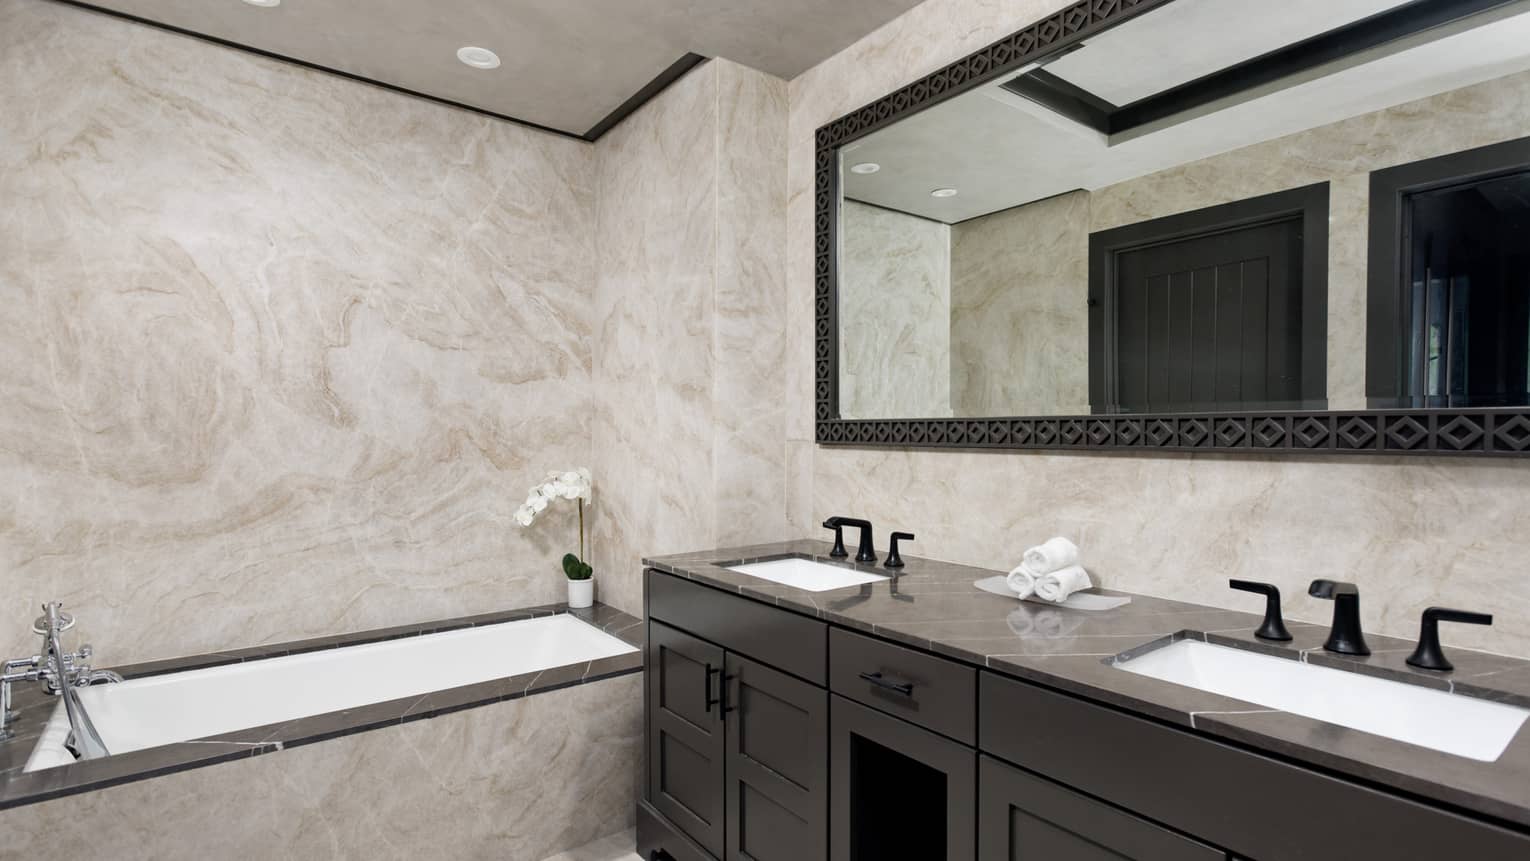 Bathroom with granite walls, built-in tub, double vanity, large mirror